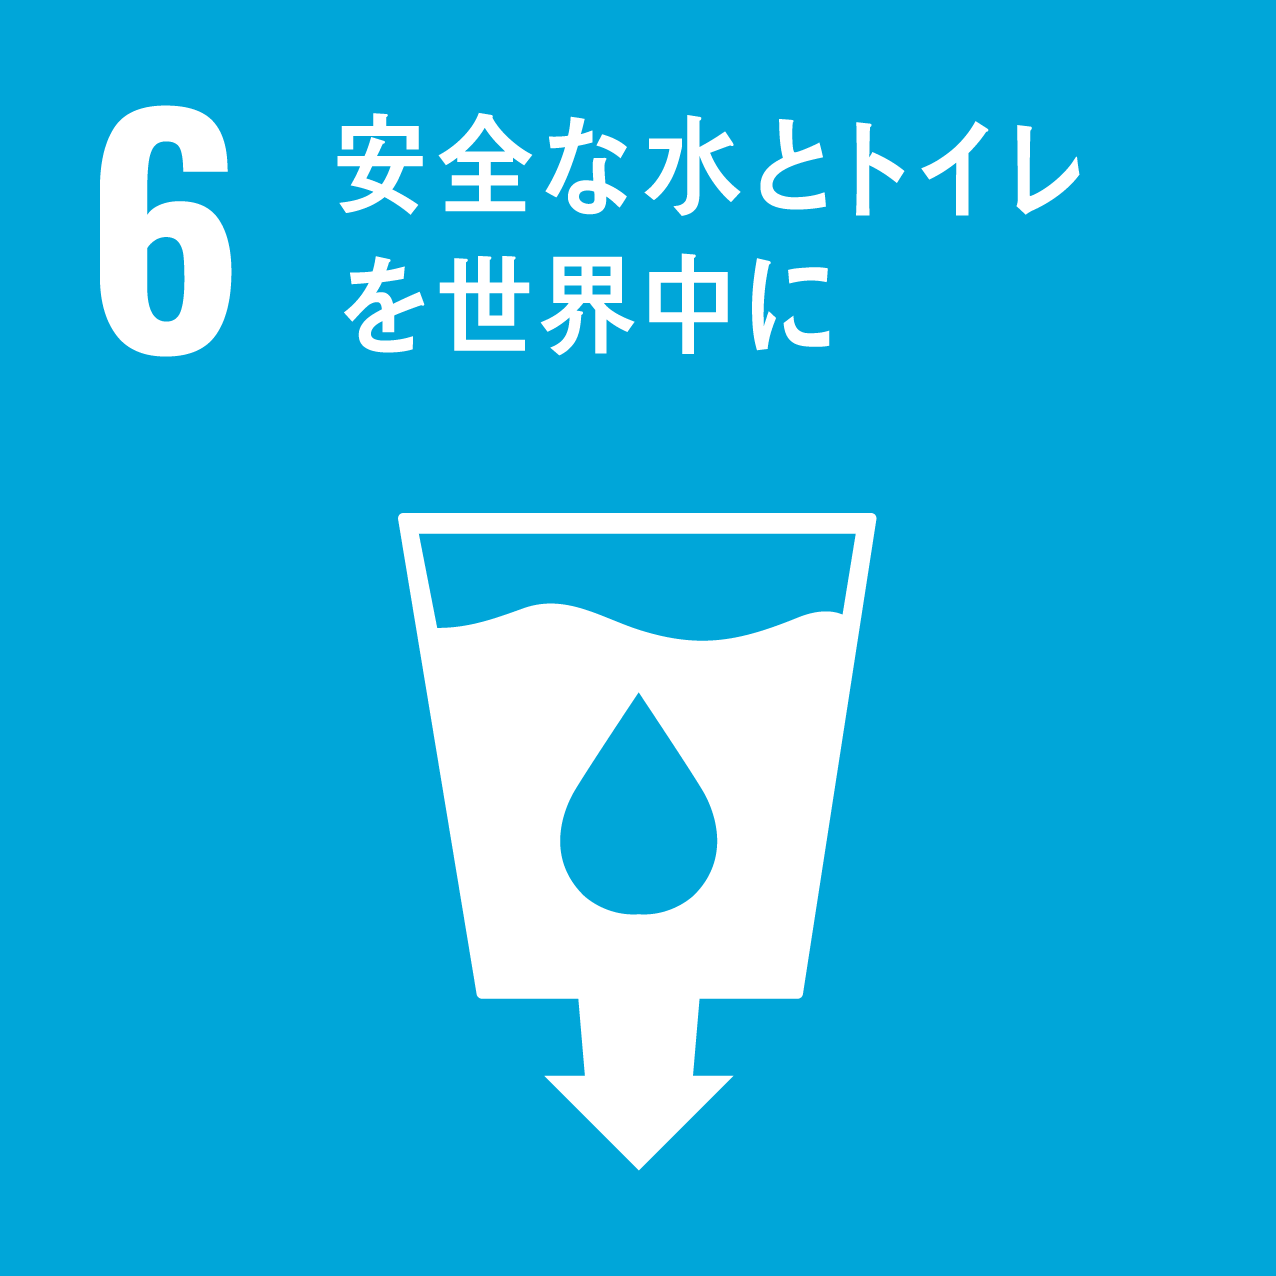 6-clean water